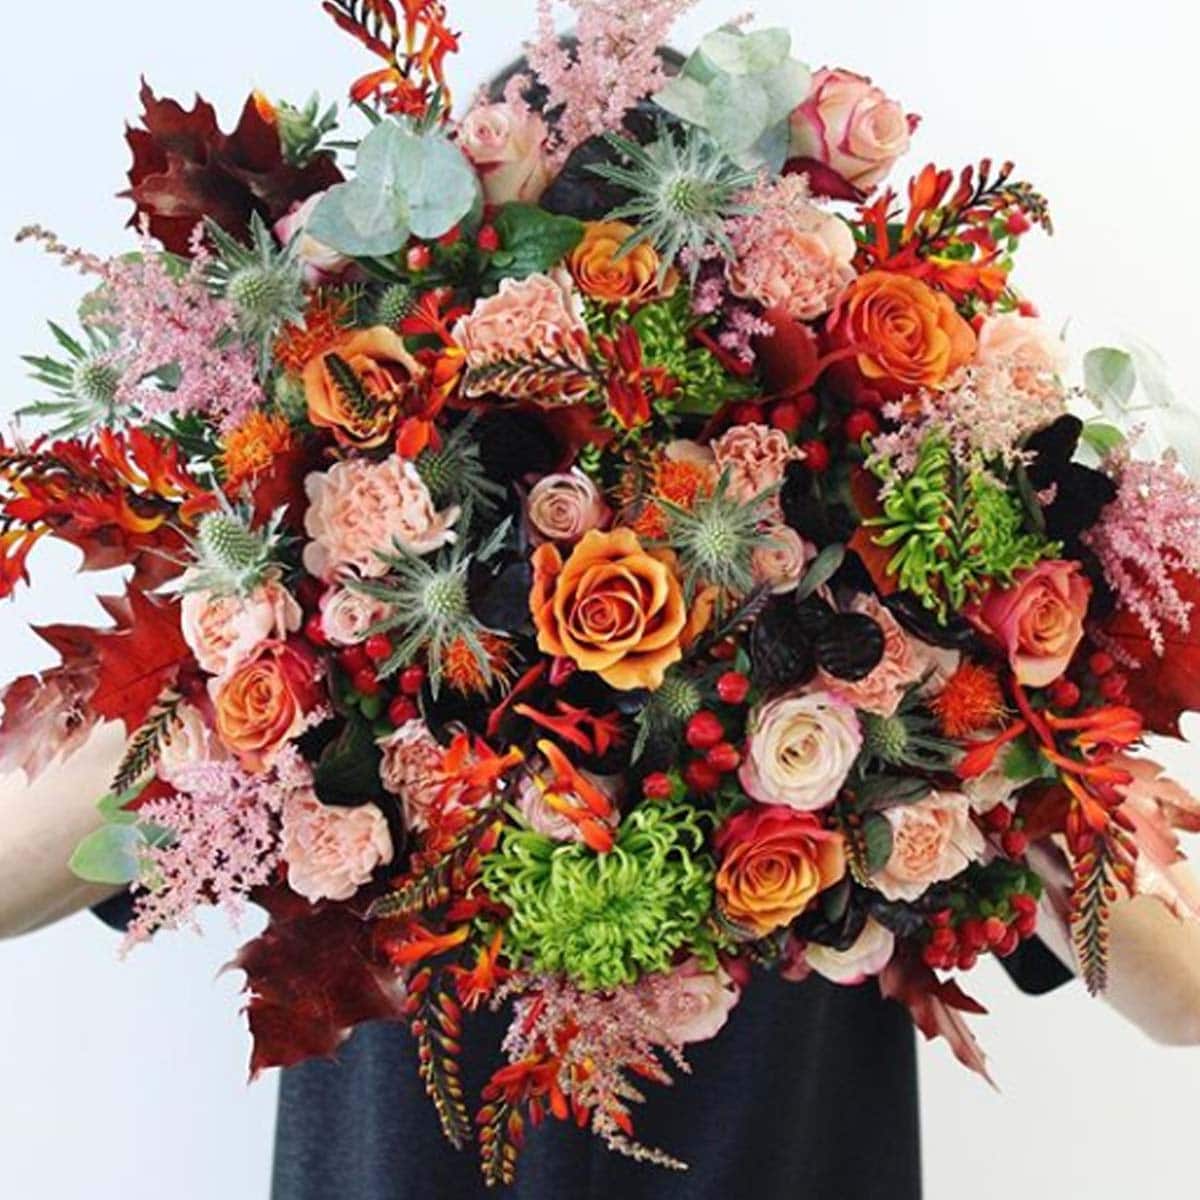 arena-flowers-florist-featured-on-thursd